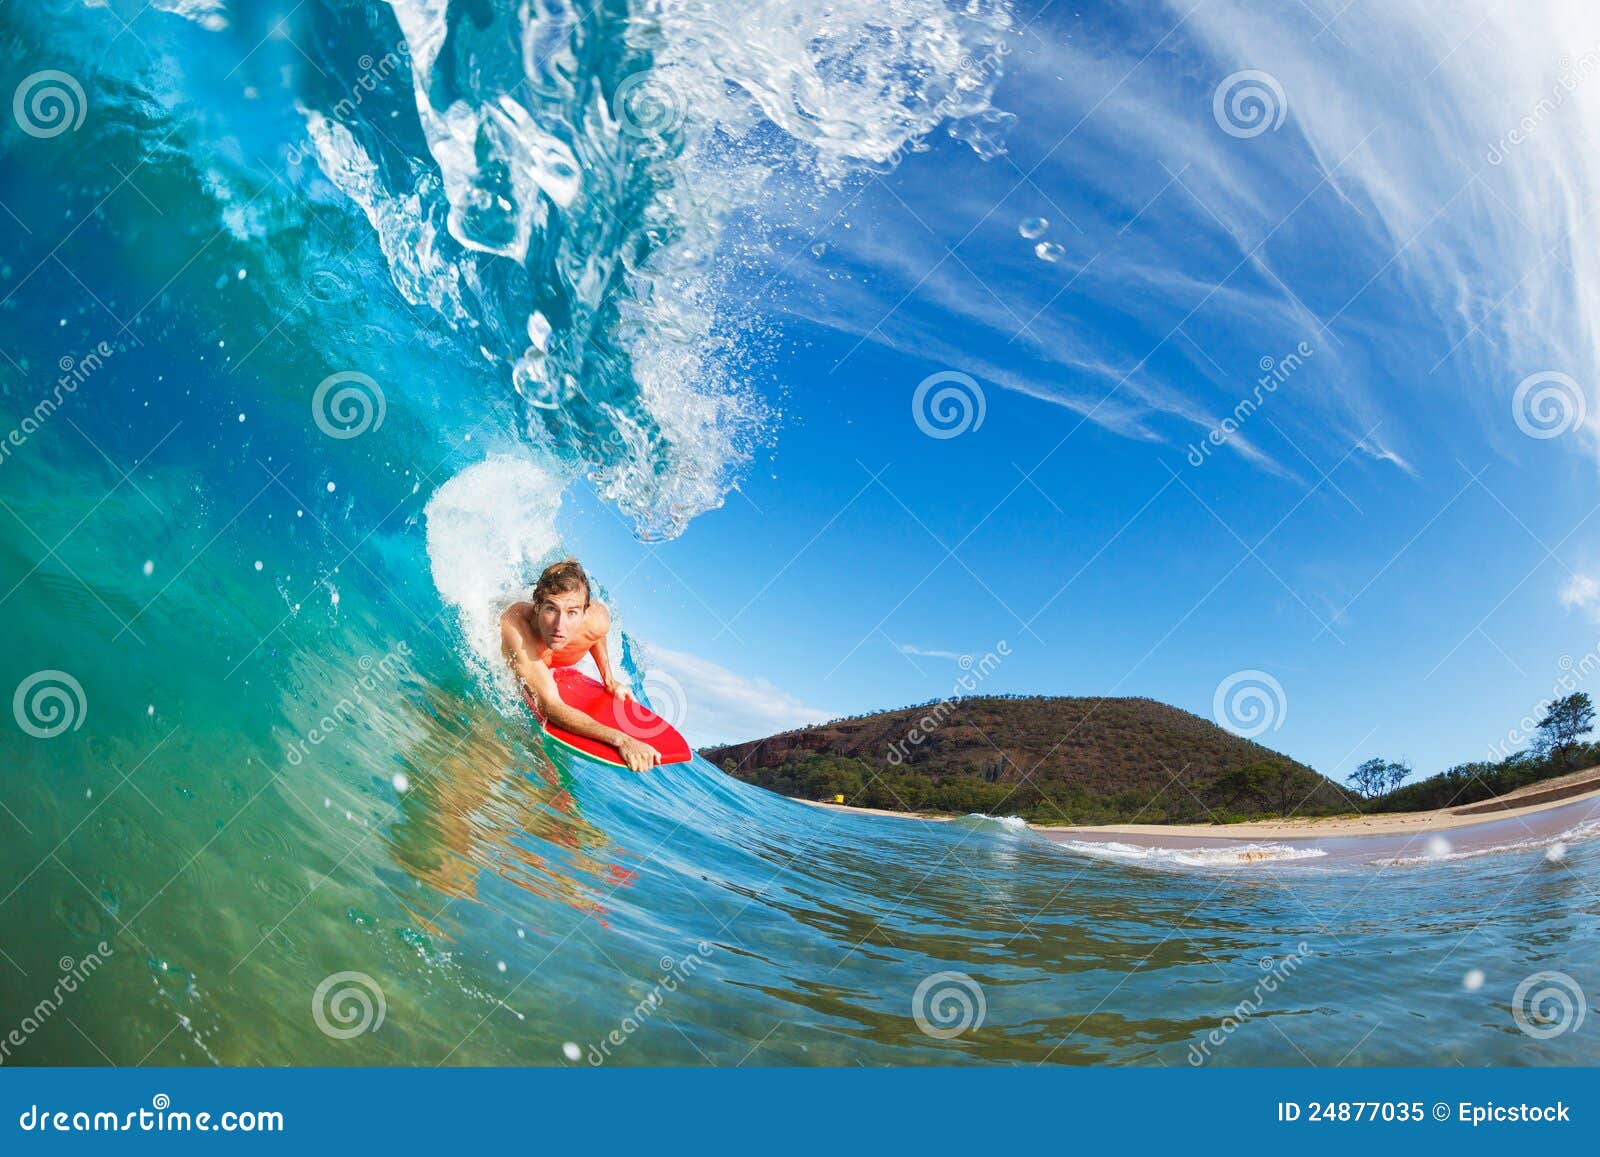 body boarder surfing